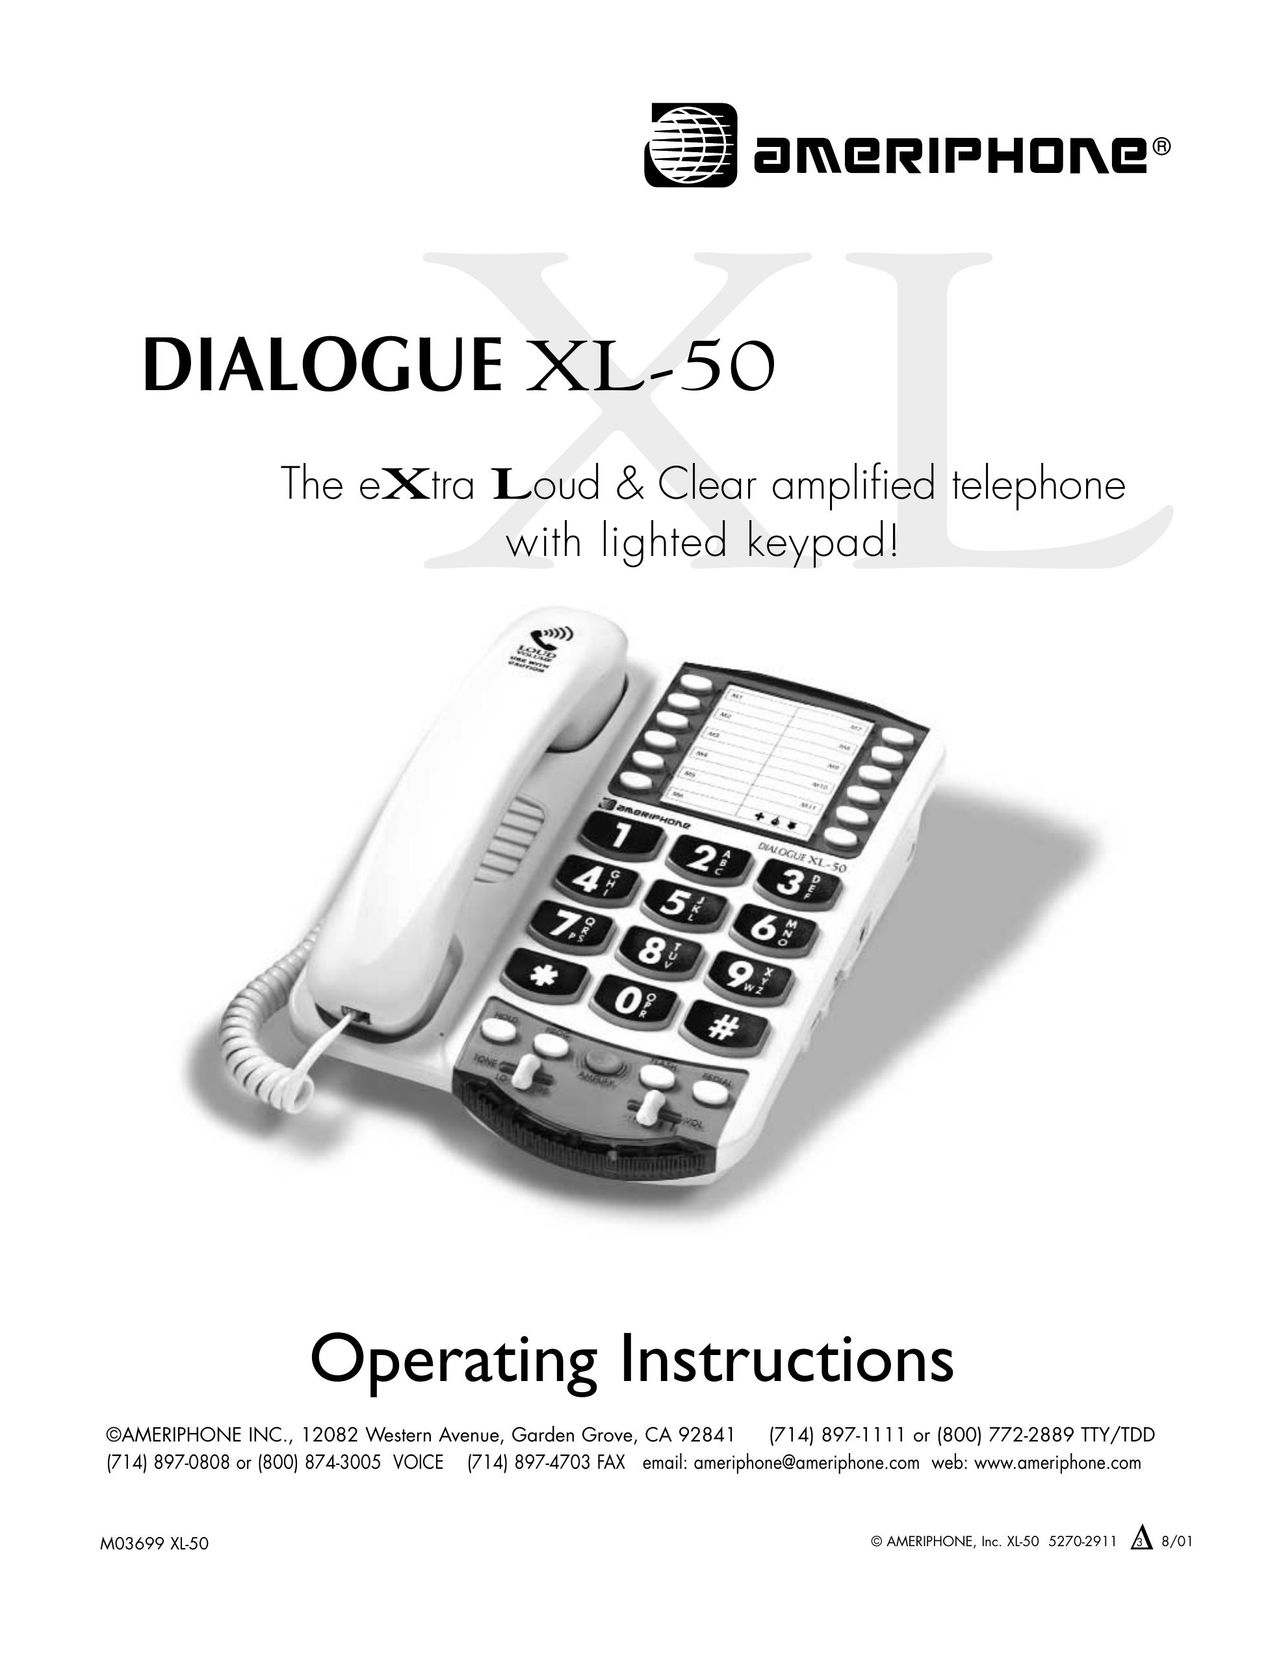 Ameriphone DIALOGUE XL-50 Telephone User Manual